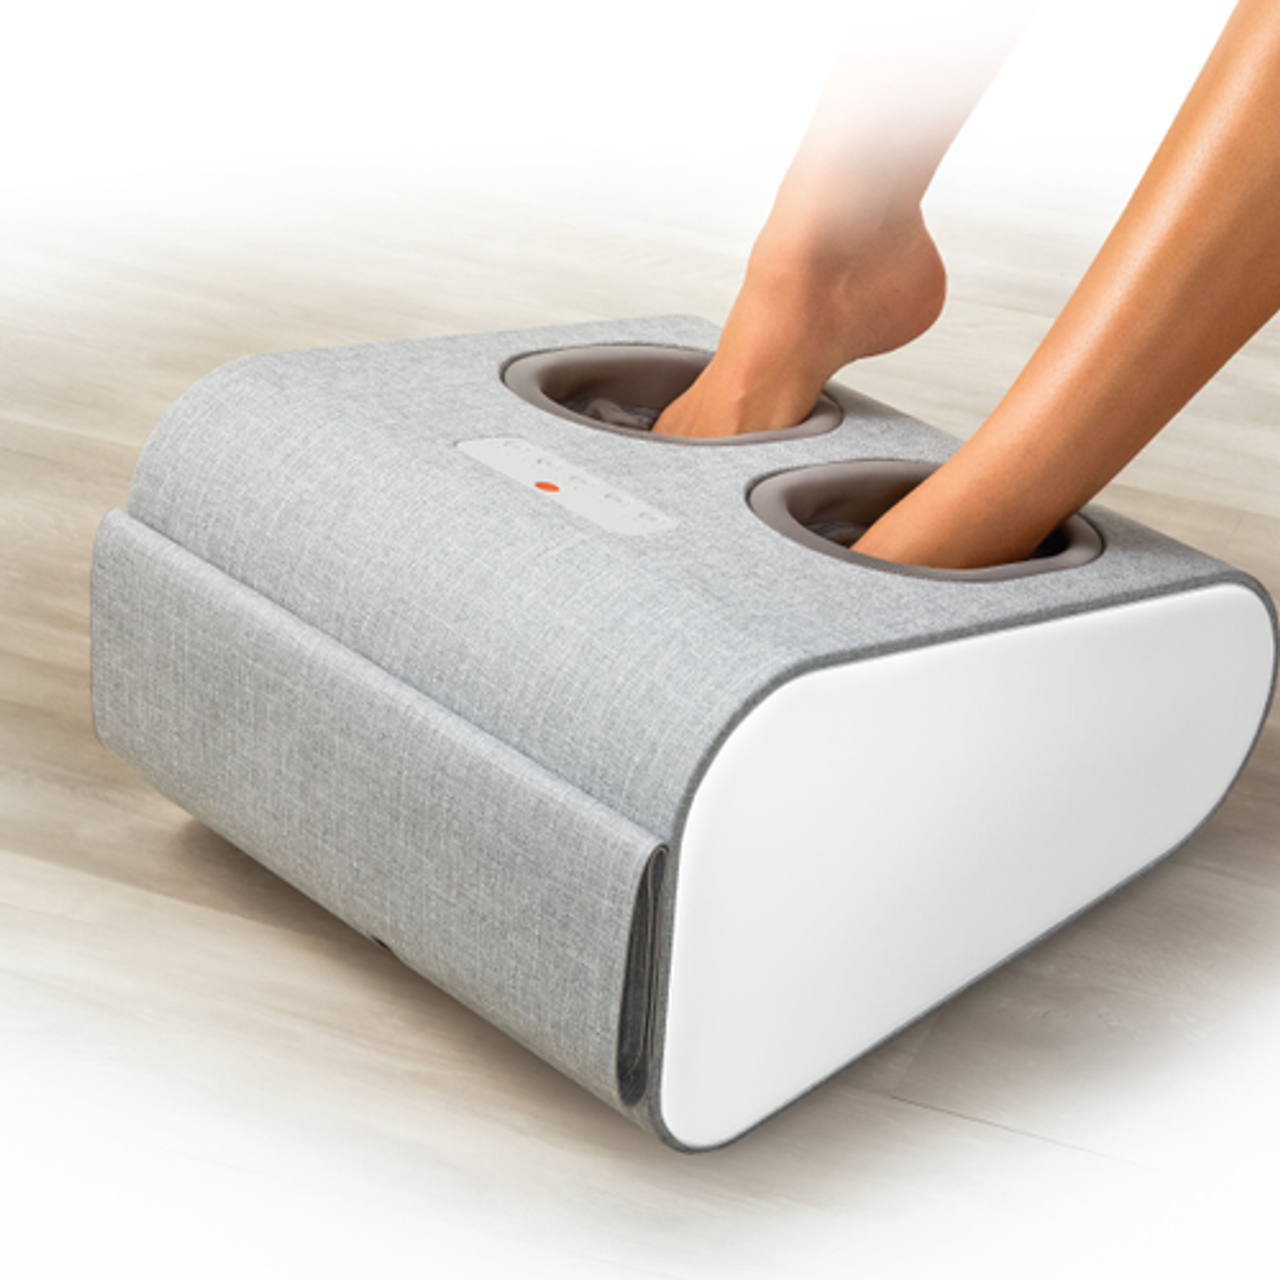 Sharper Image - Shiatsu Foot+ Compression and Rolling Massage with Heat - Gray